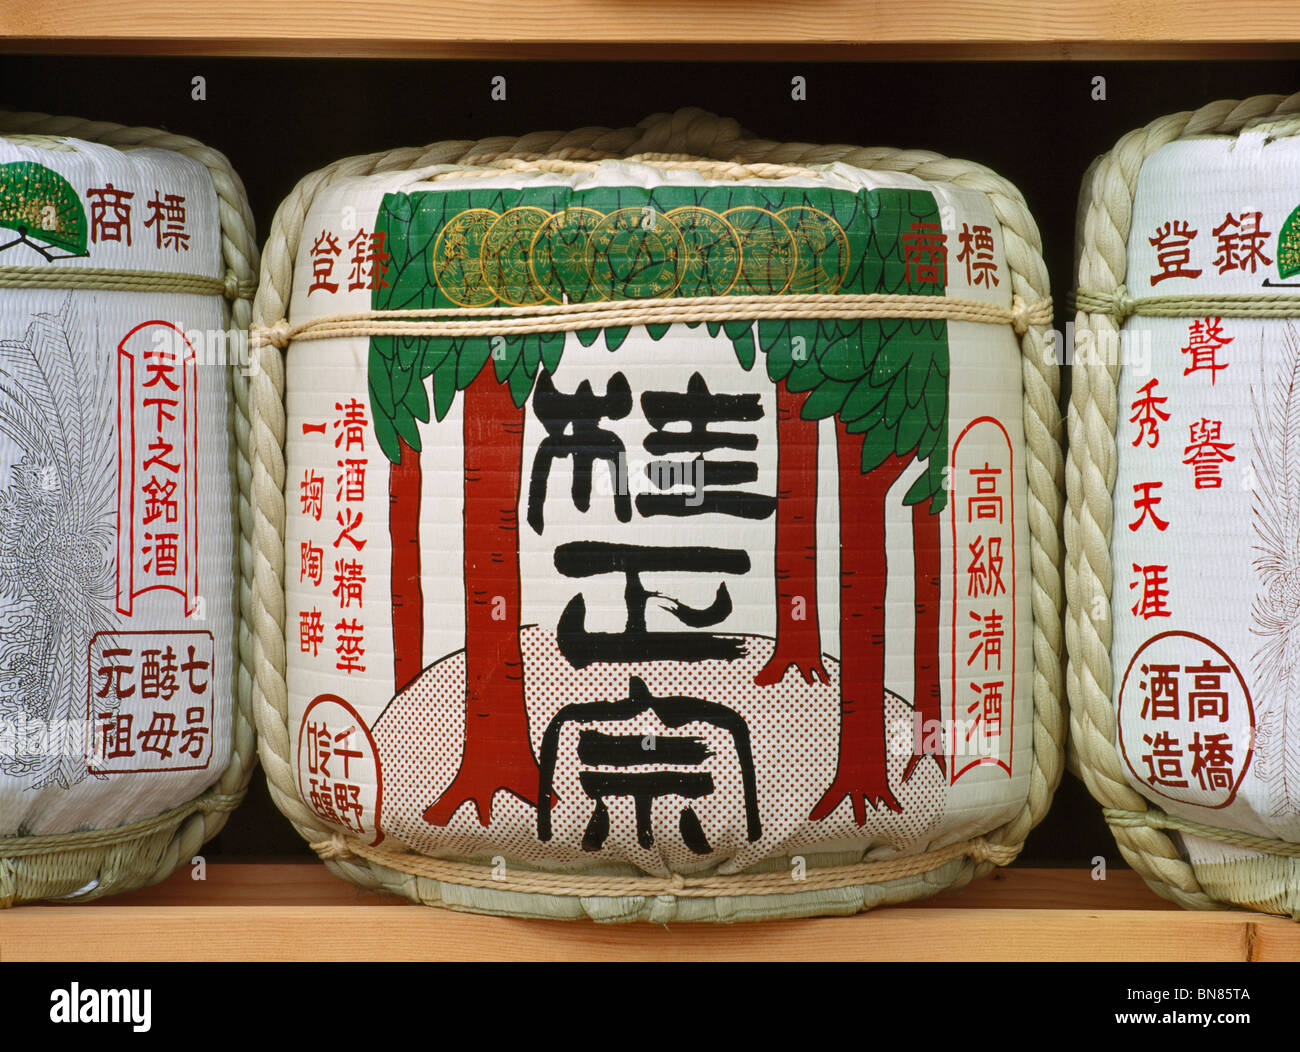 Sake barrel on display outside Zenkoji Temple, Nagano, Japan Stock Photo